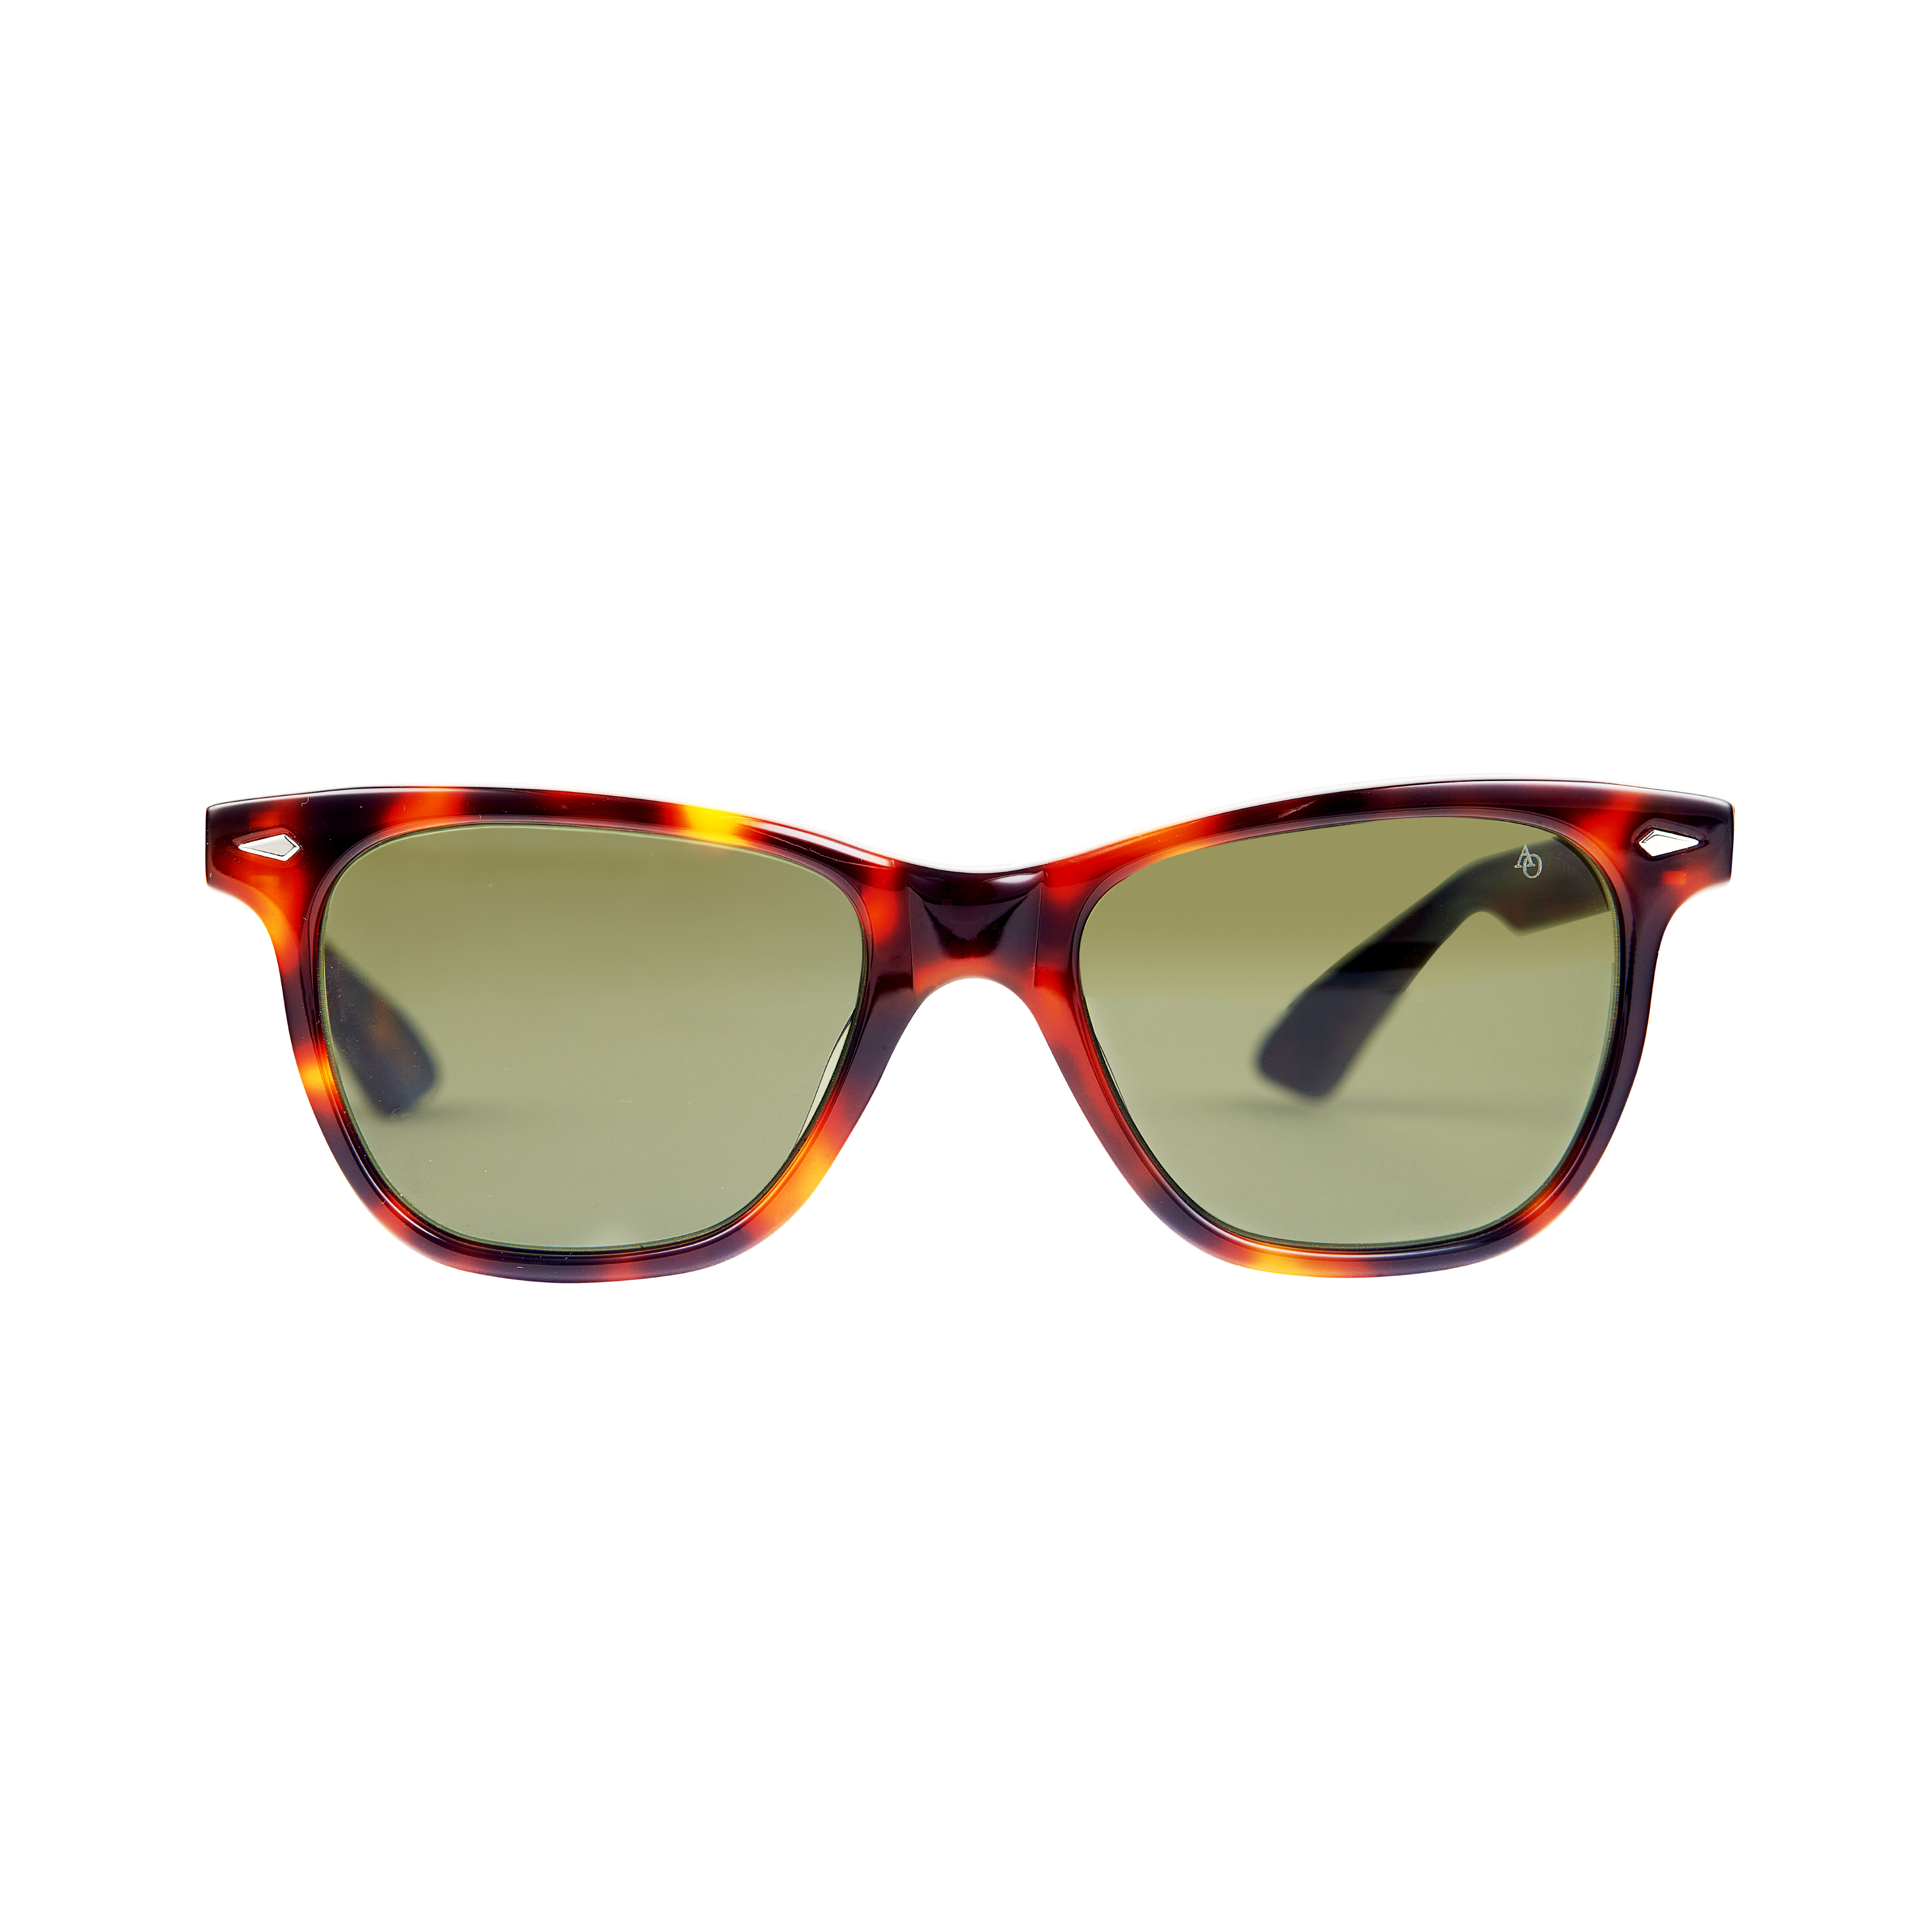 JFK Saratoga Sunglasses Polarized